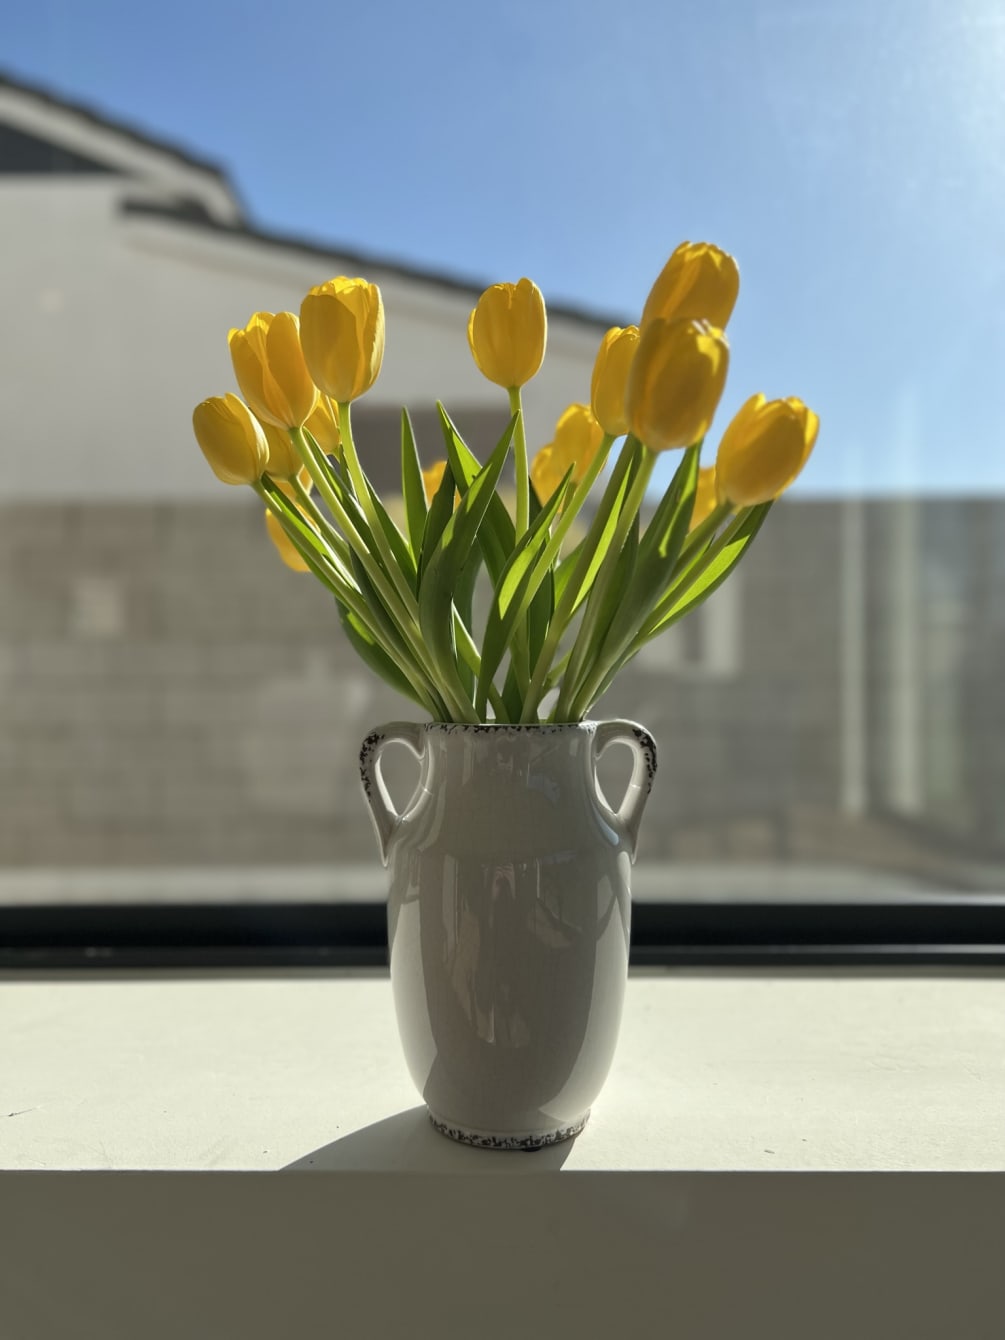 A dozen of premium tulips in a glass or ceramic vase. Vase